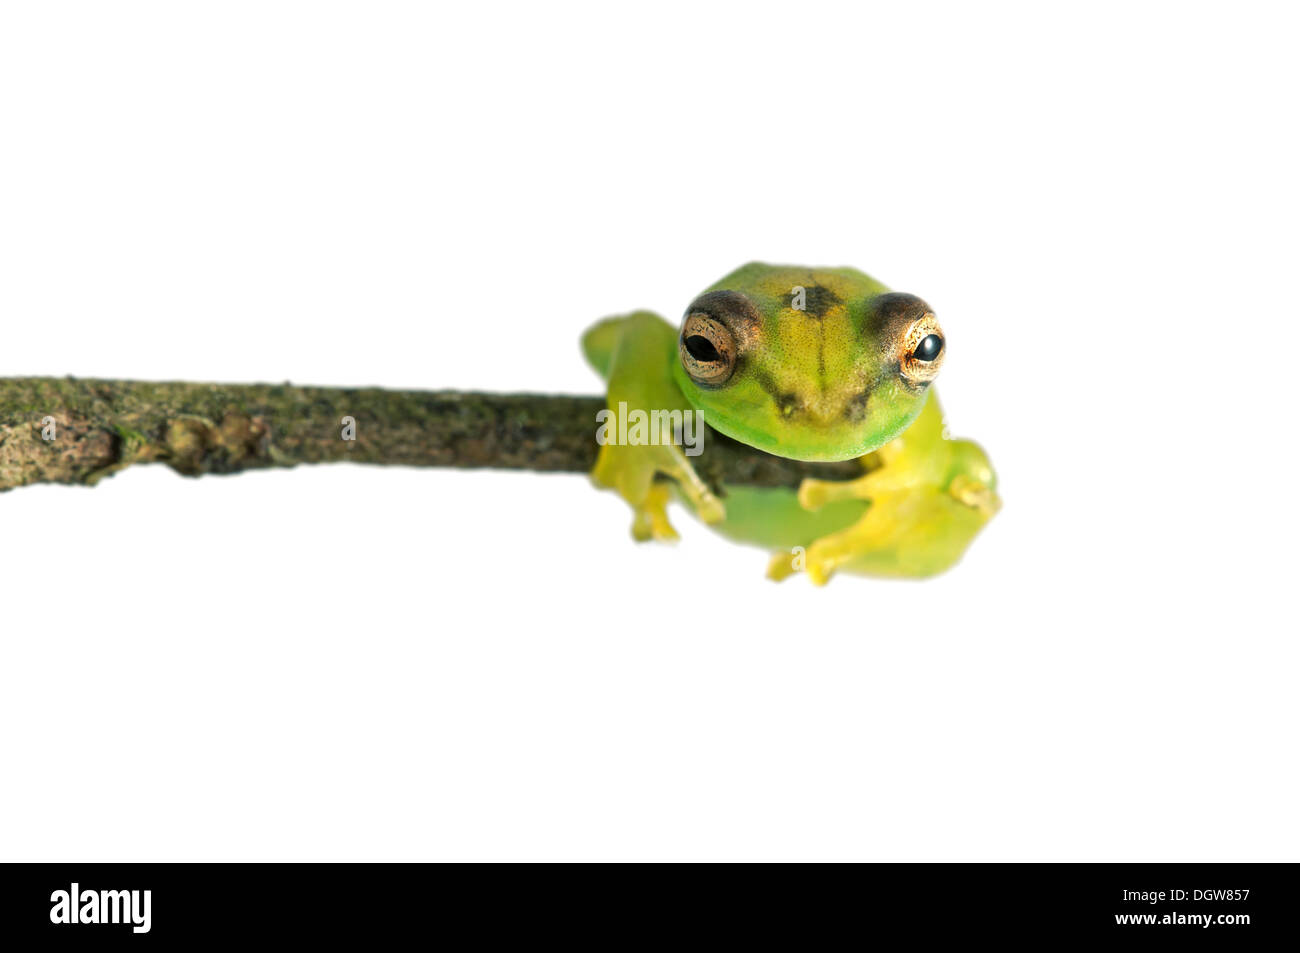 Juvenile of Orinoco lime tree frog Stock Photo